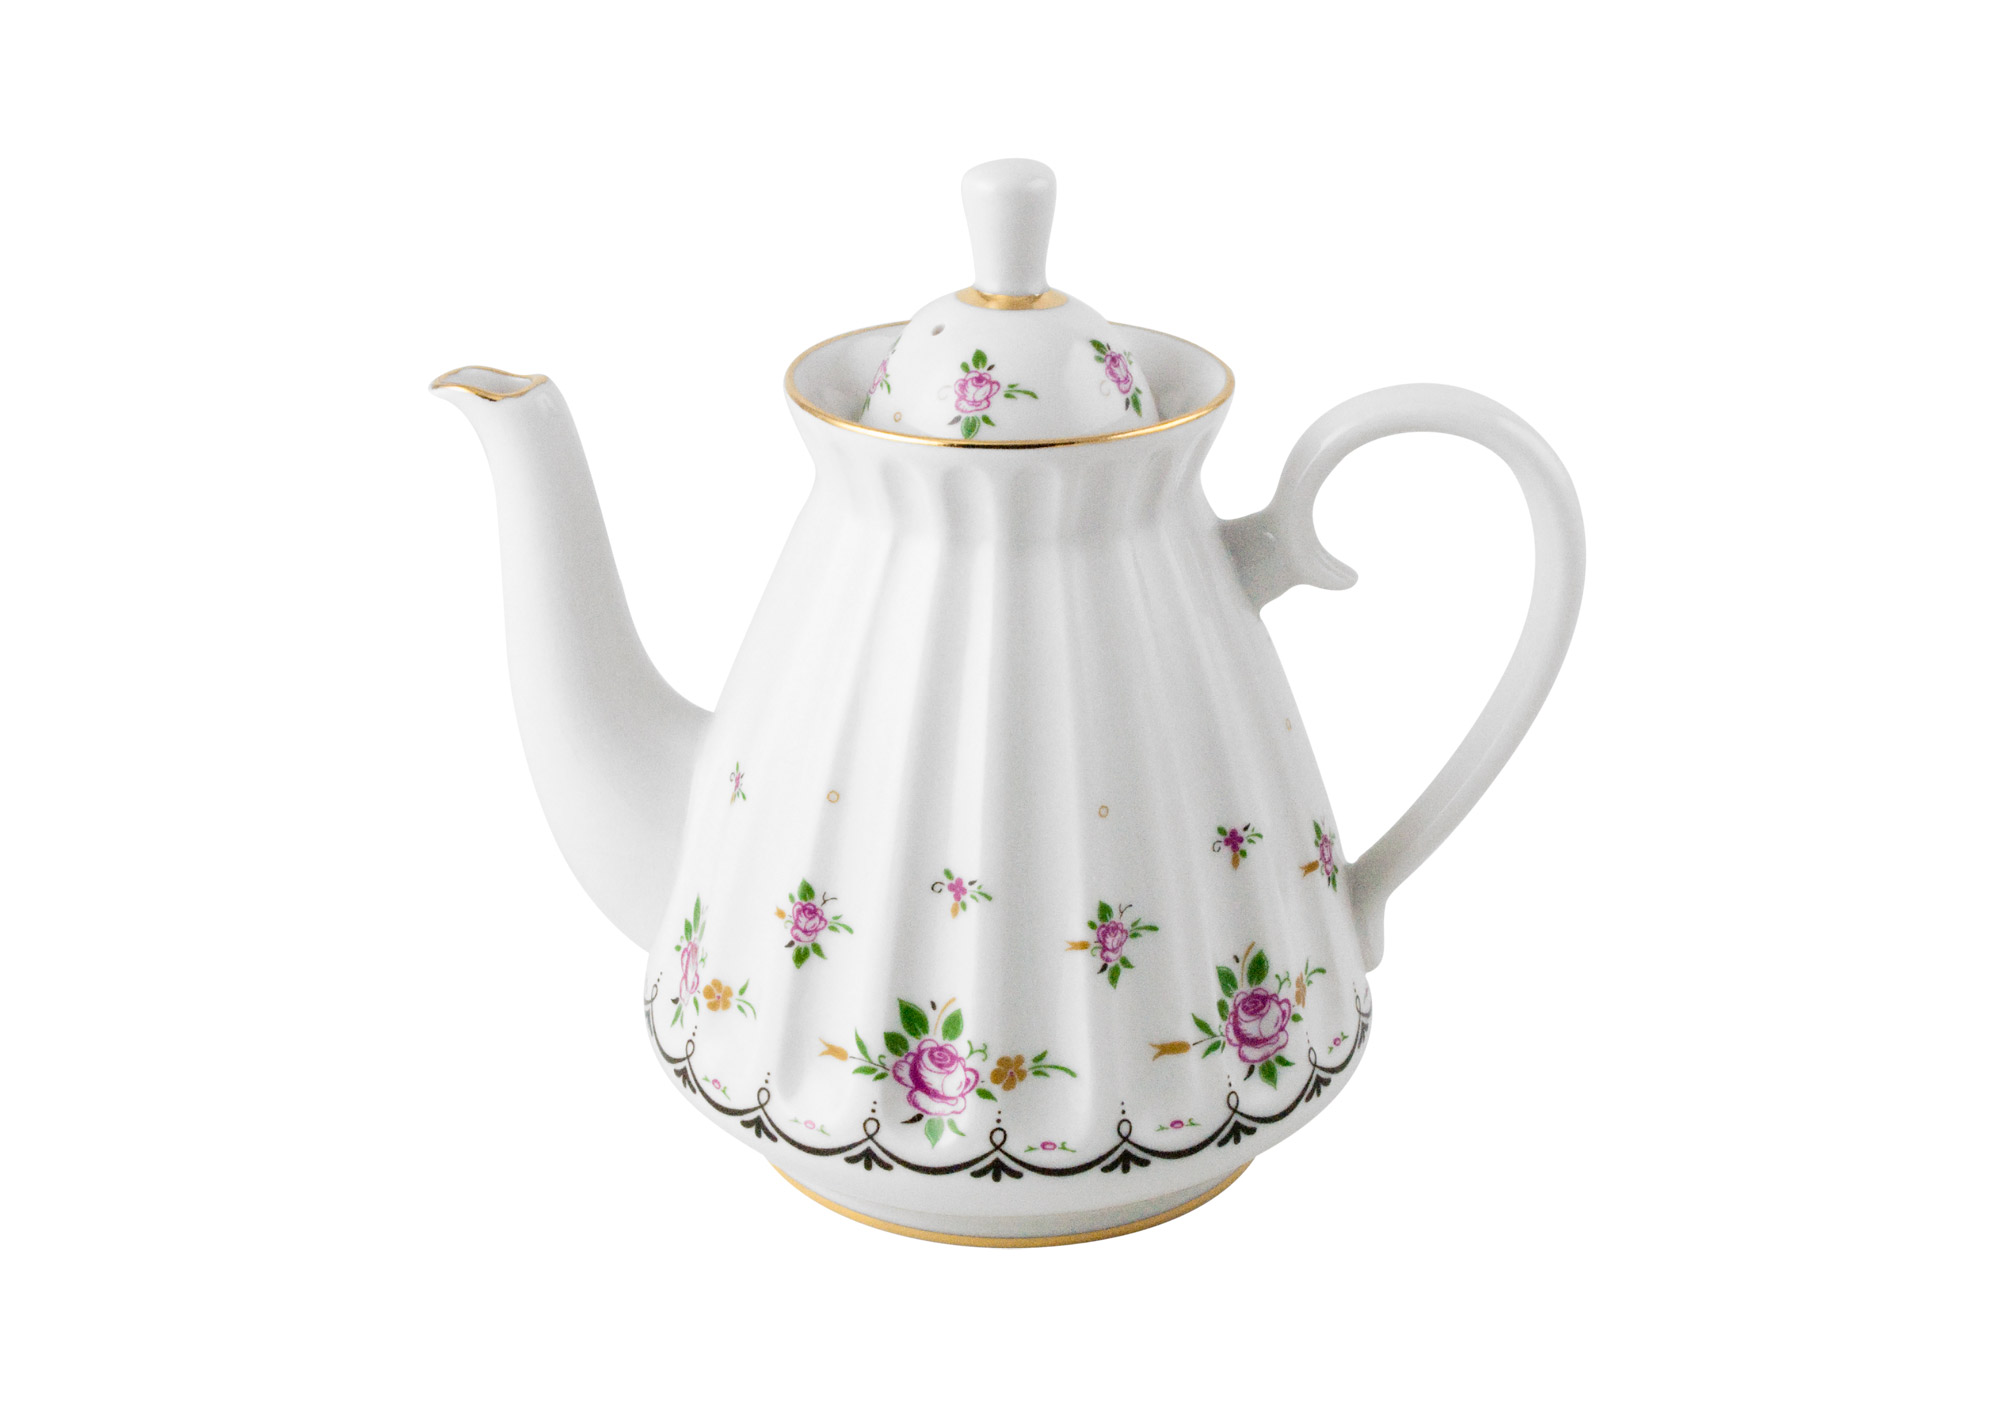 Buy Arabesque Teapot, 3-cup at GoldenCockerel.com